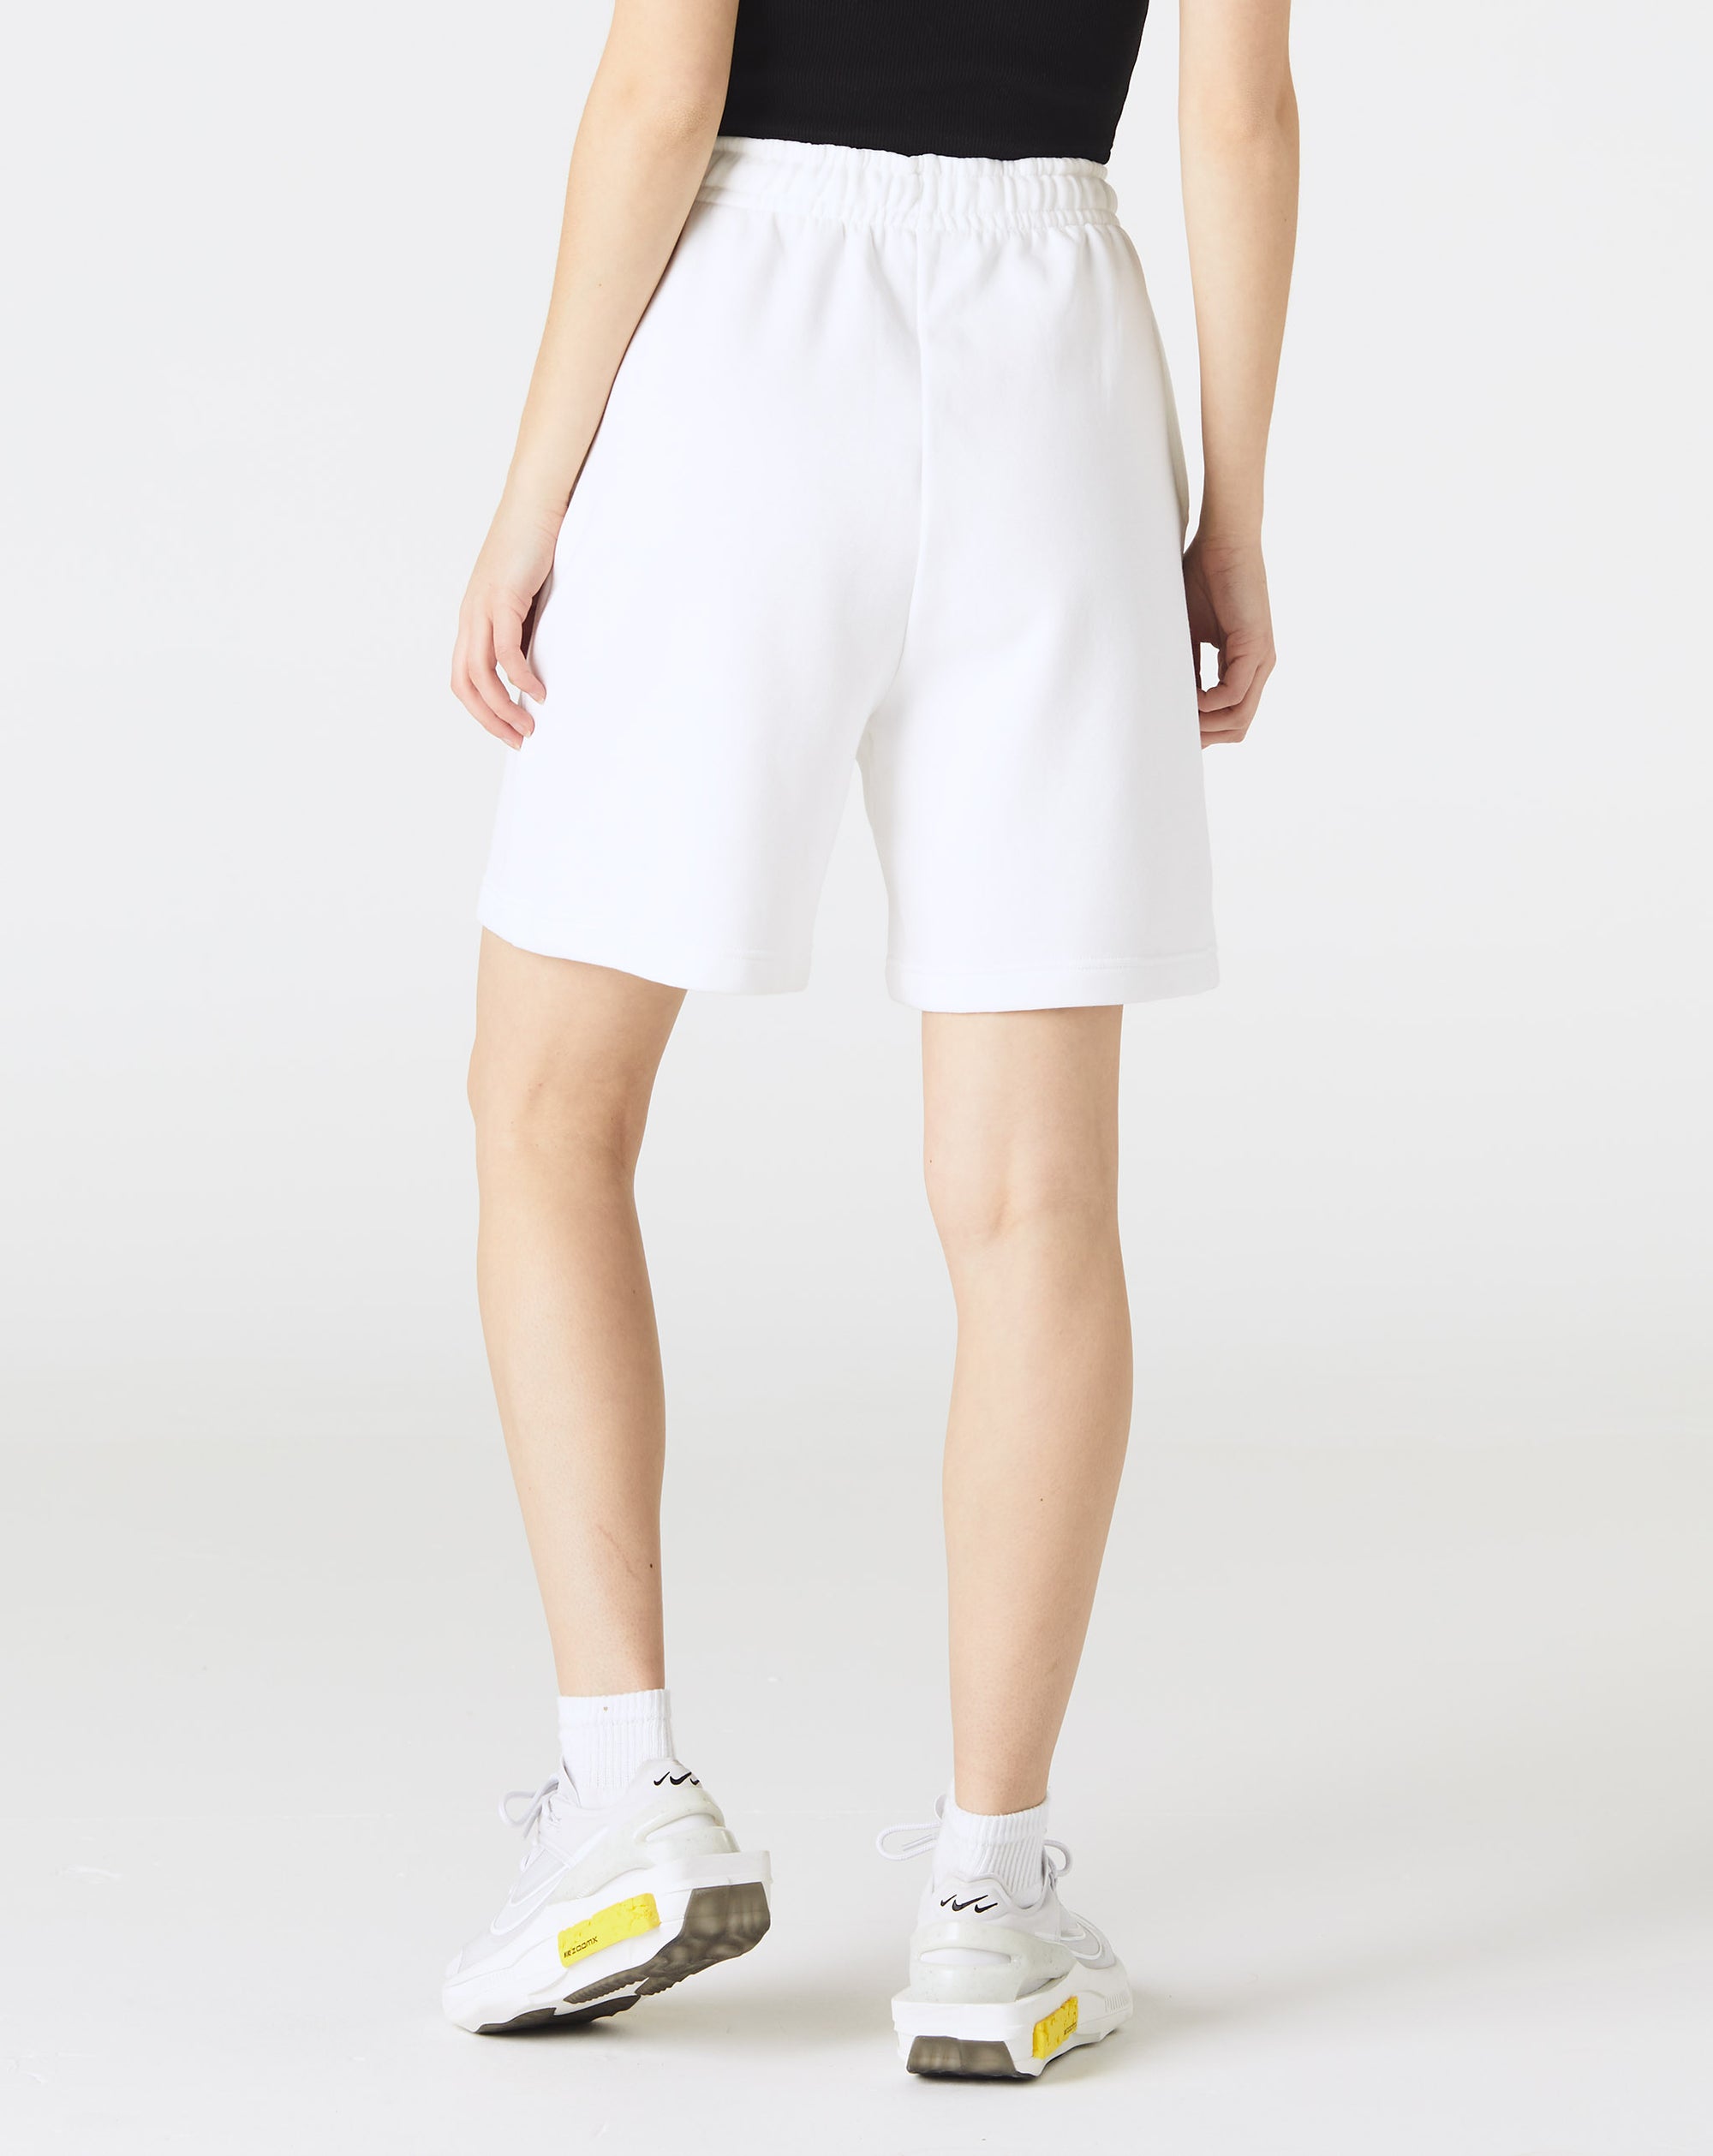 Nike Women's Essential Fleece High-Rise Shorts - Rule of Next Apparel